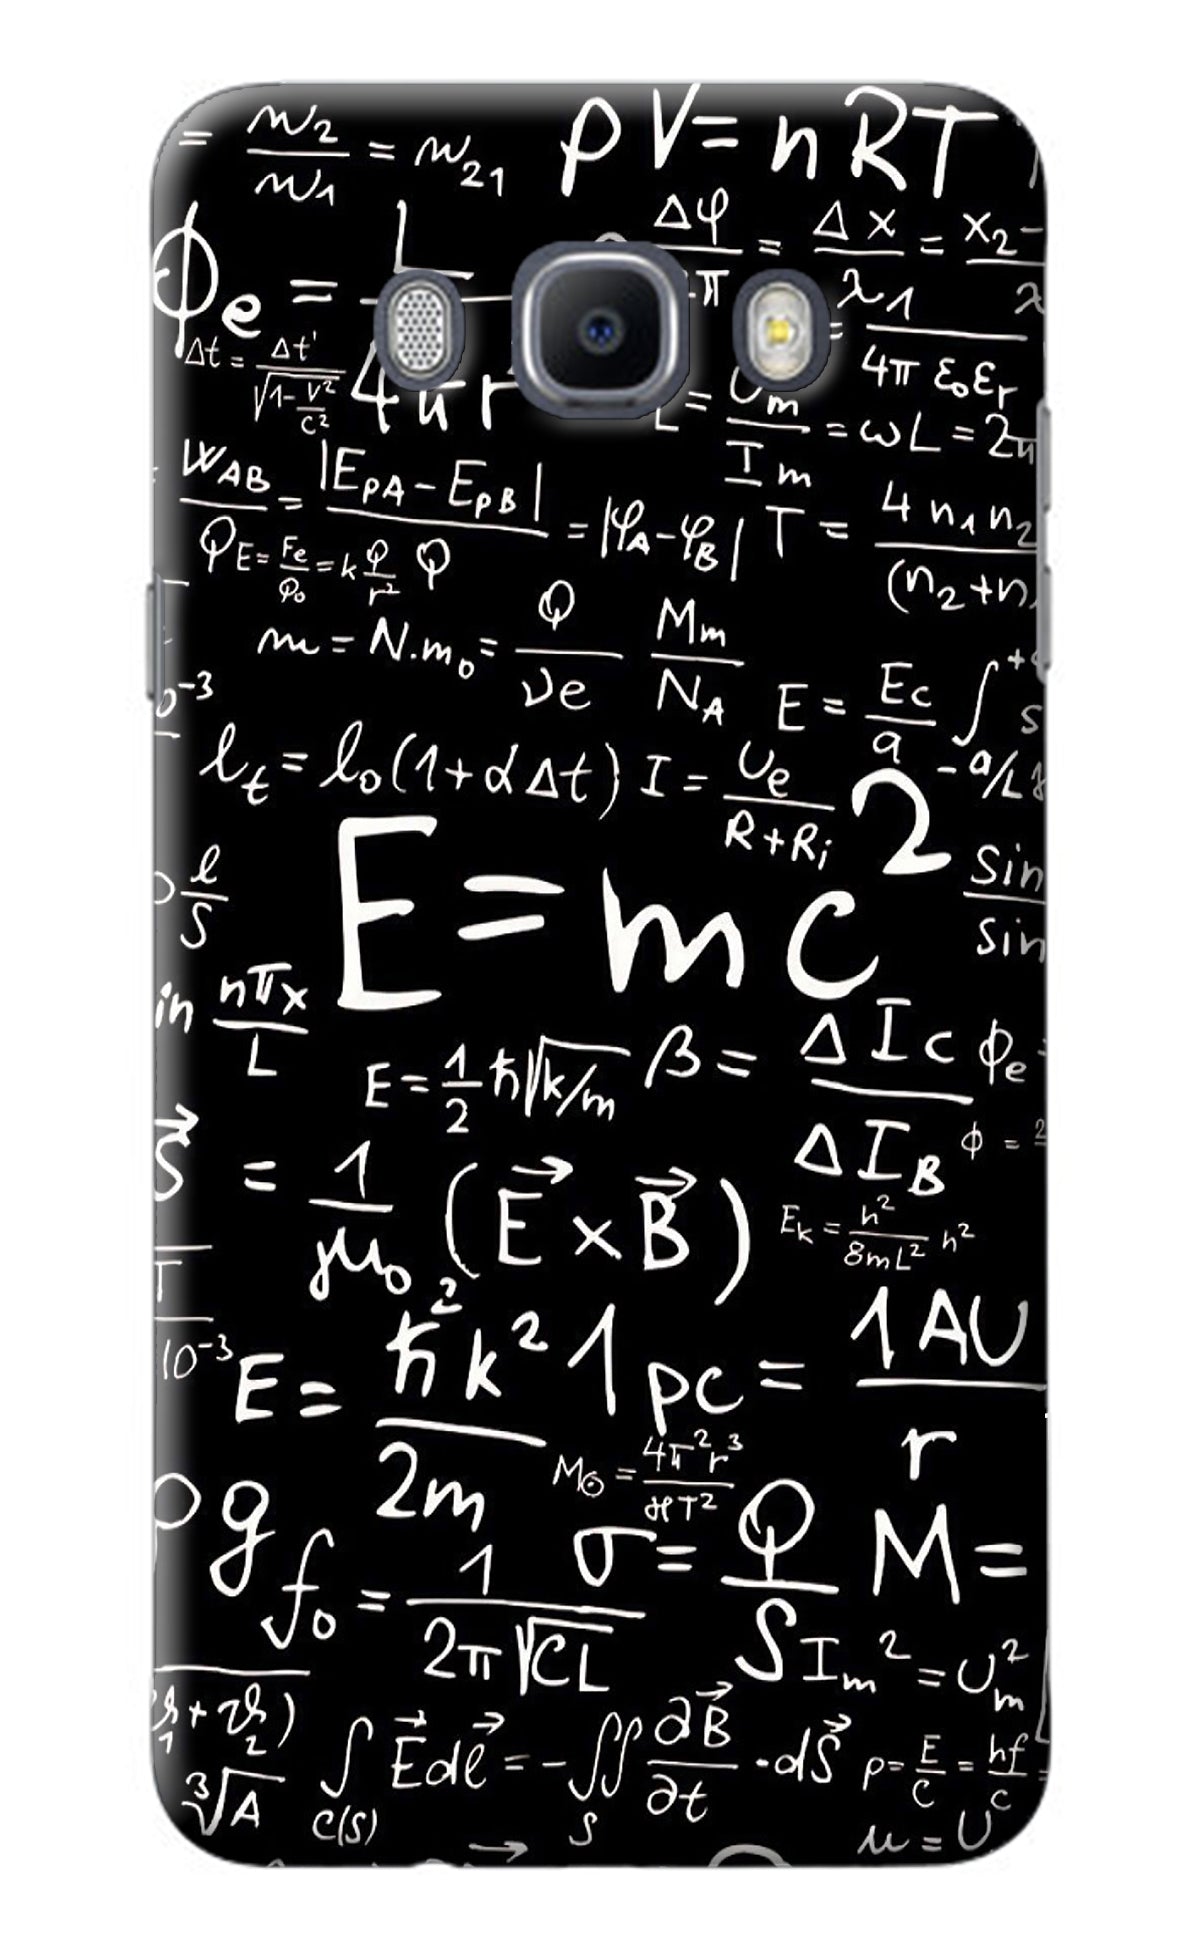 Physics Albert Einstein Formula Samsung J7 2016 Back Cover